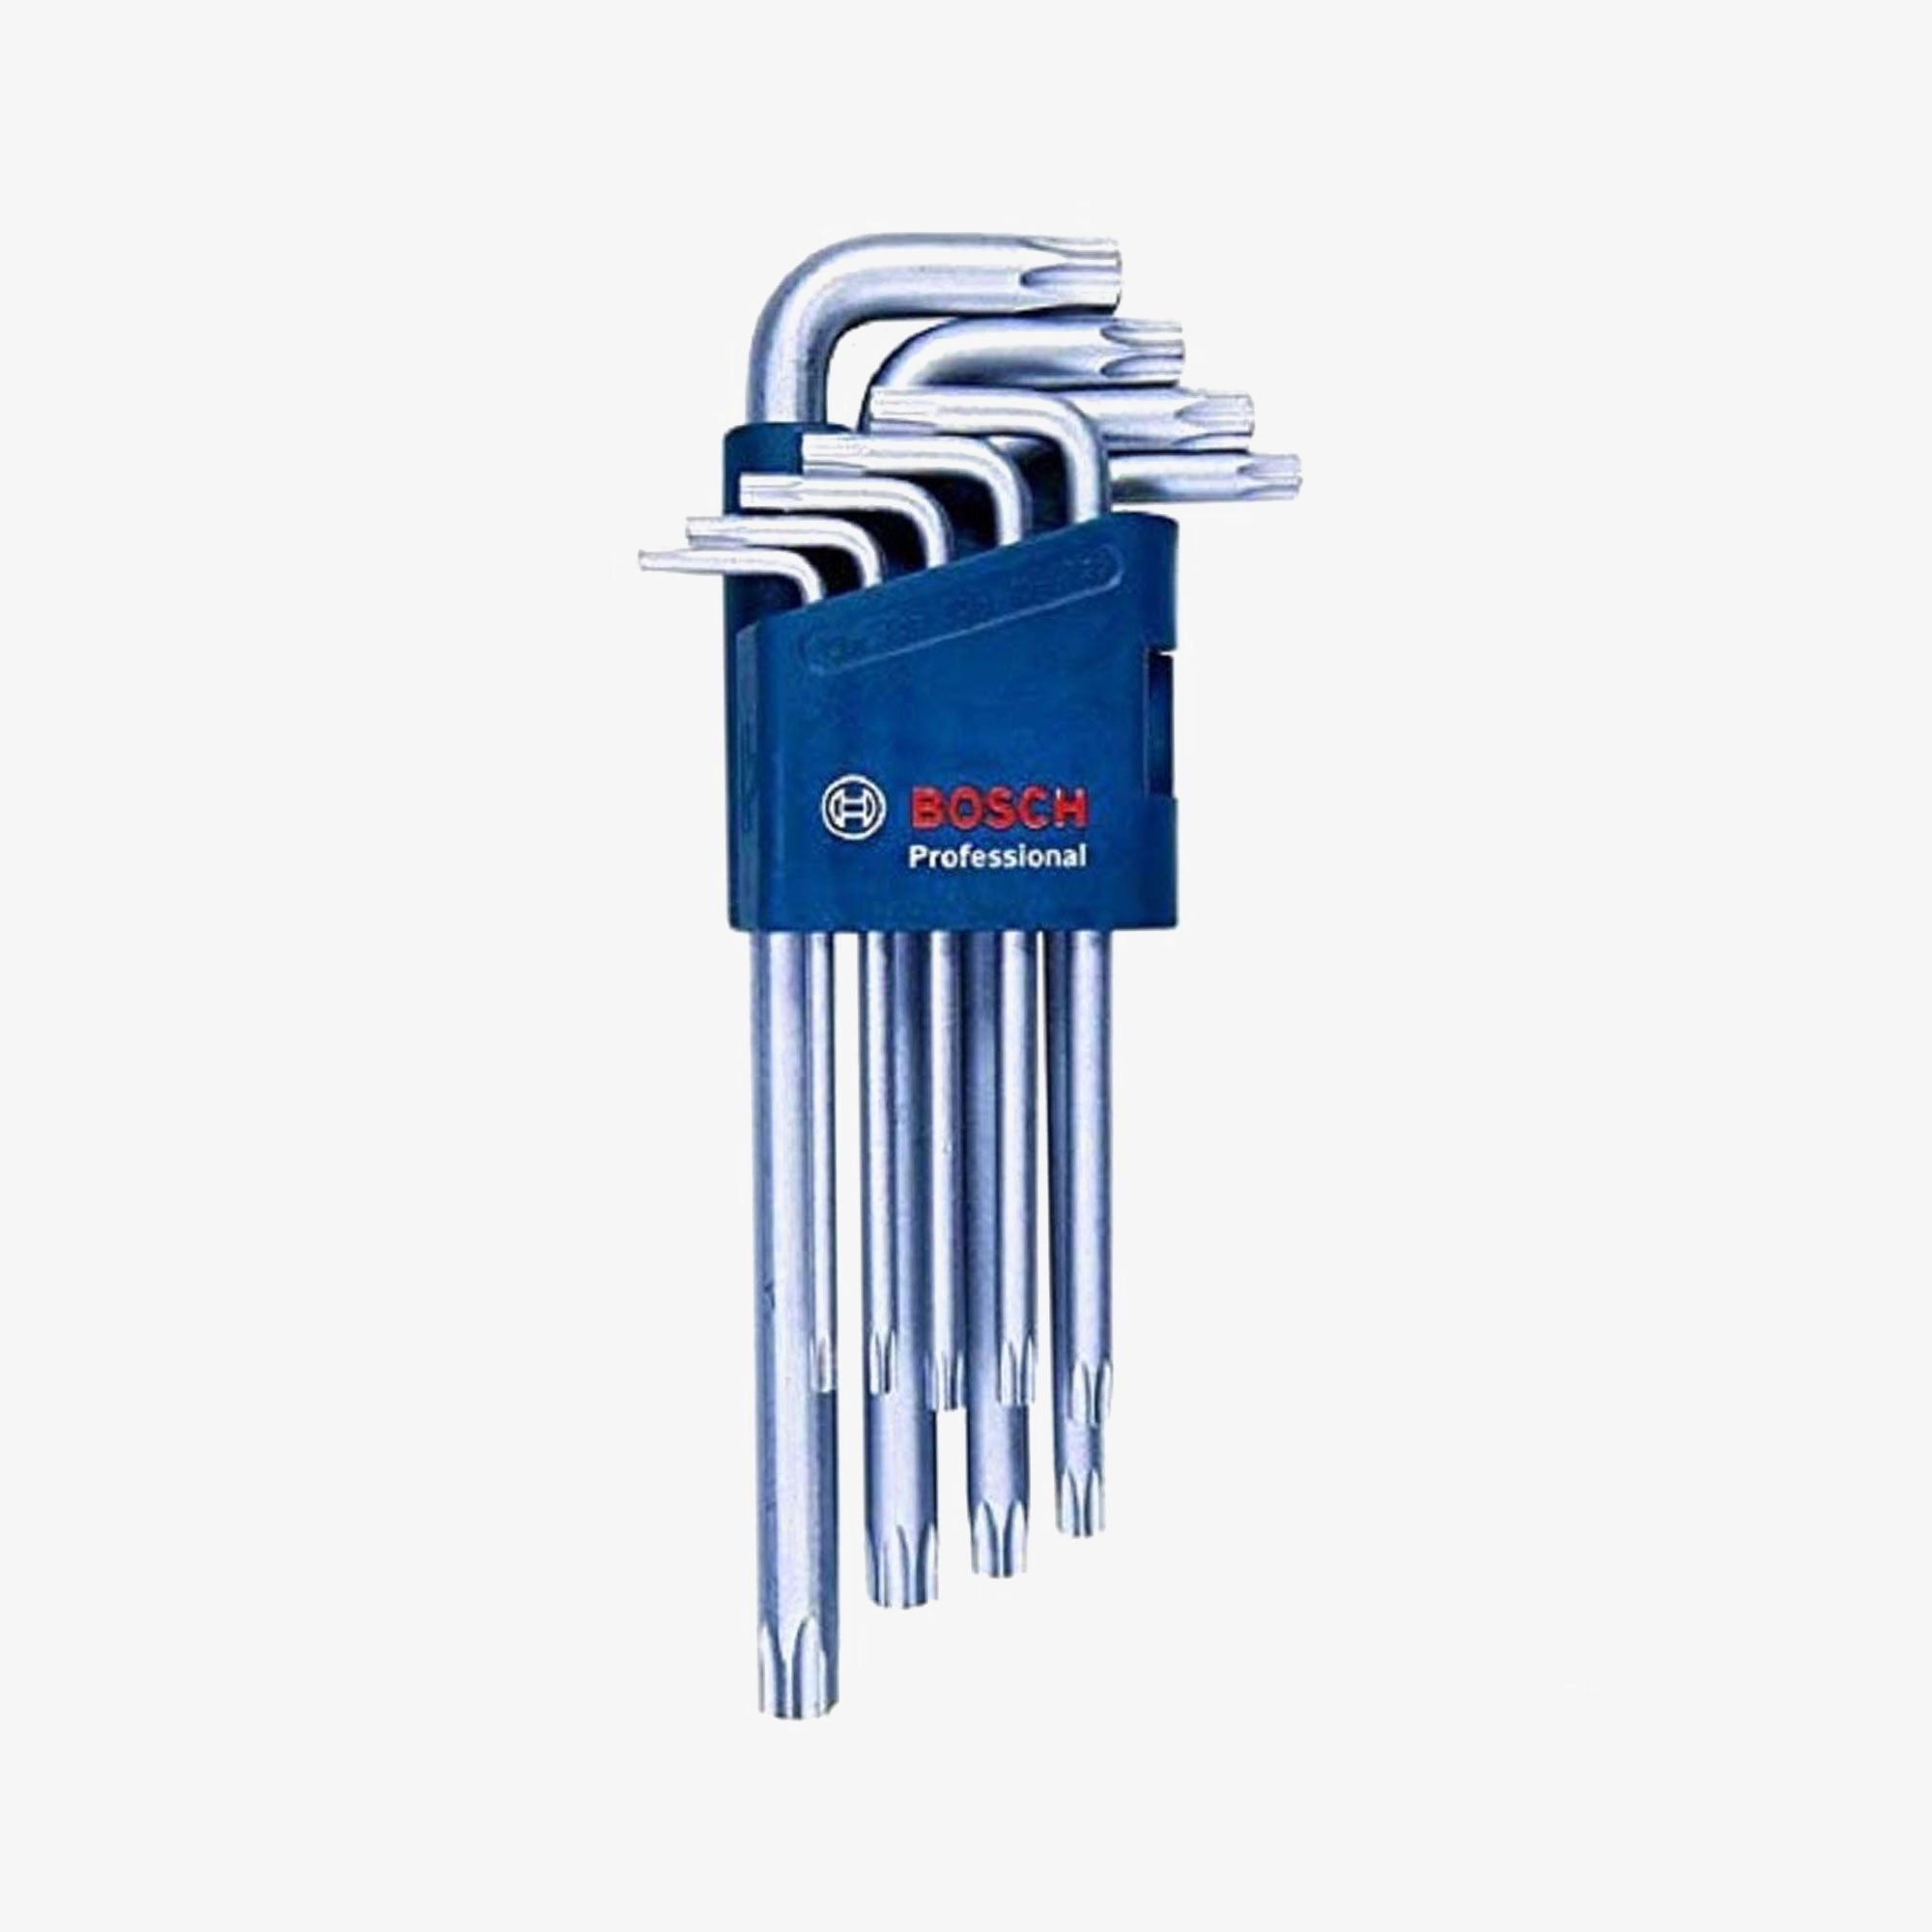 BOSCH 1600A01TH4 TORX 9-dijelni set profesionalnih ključeva